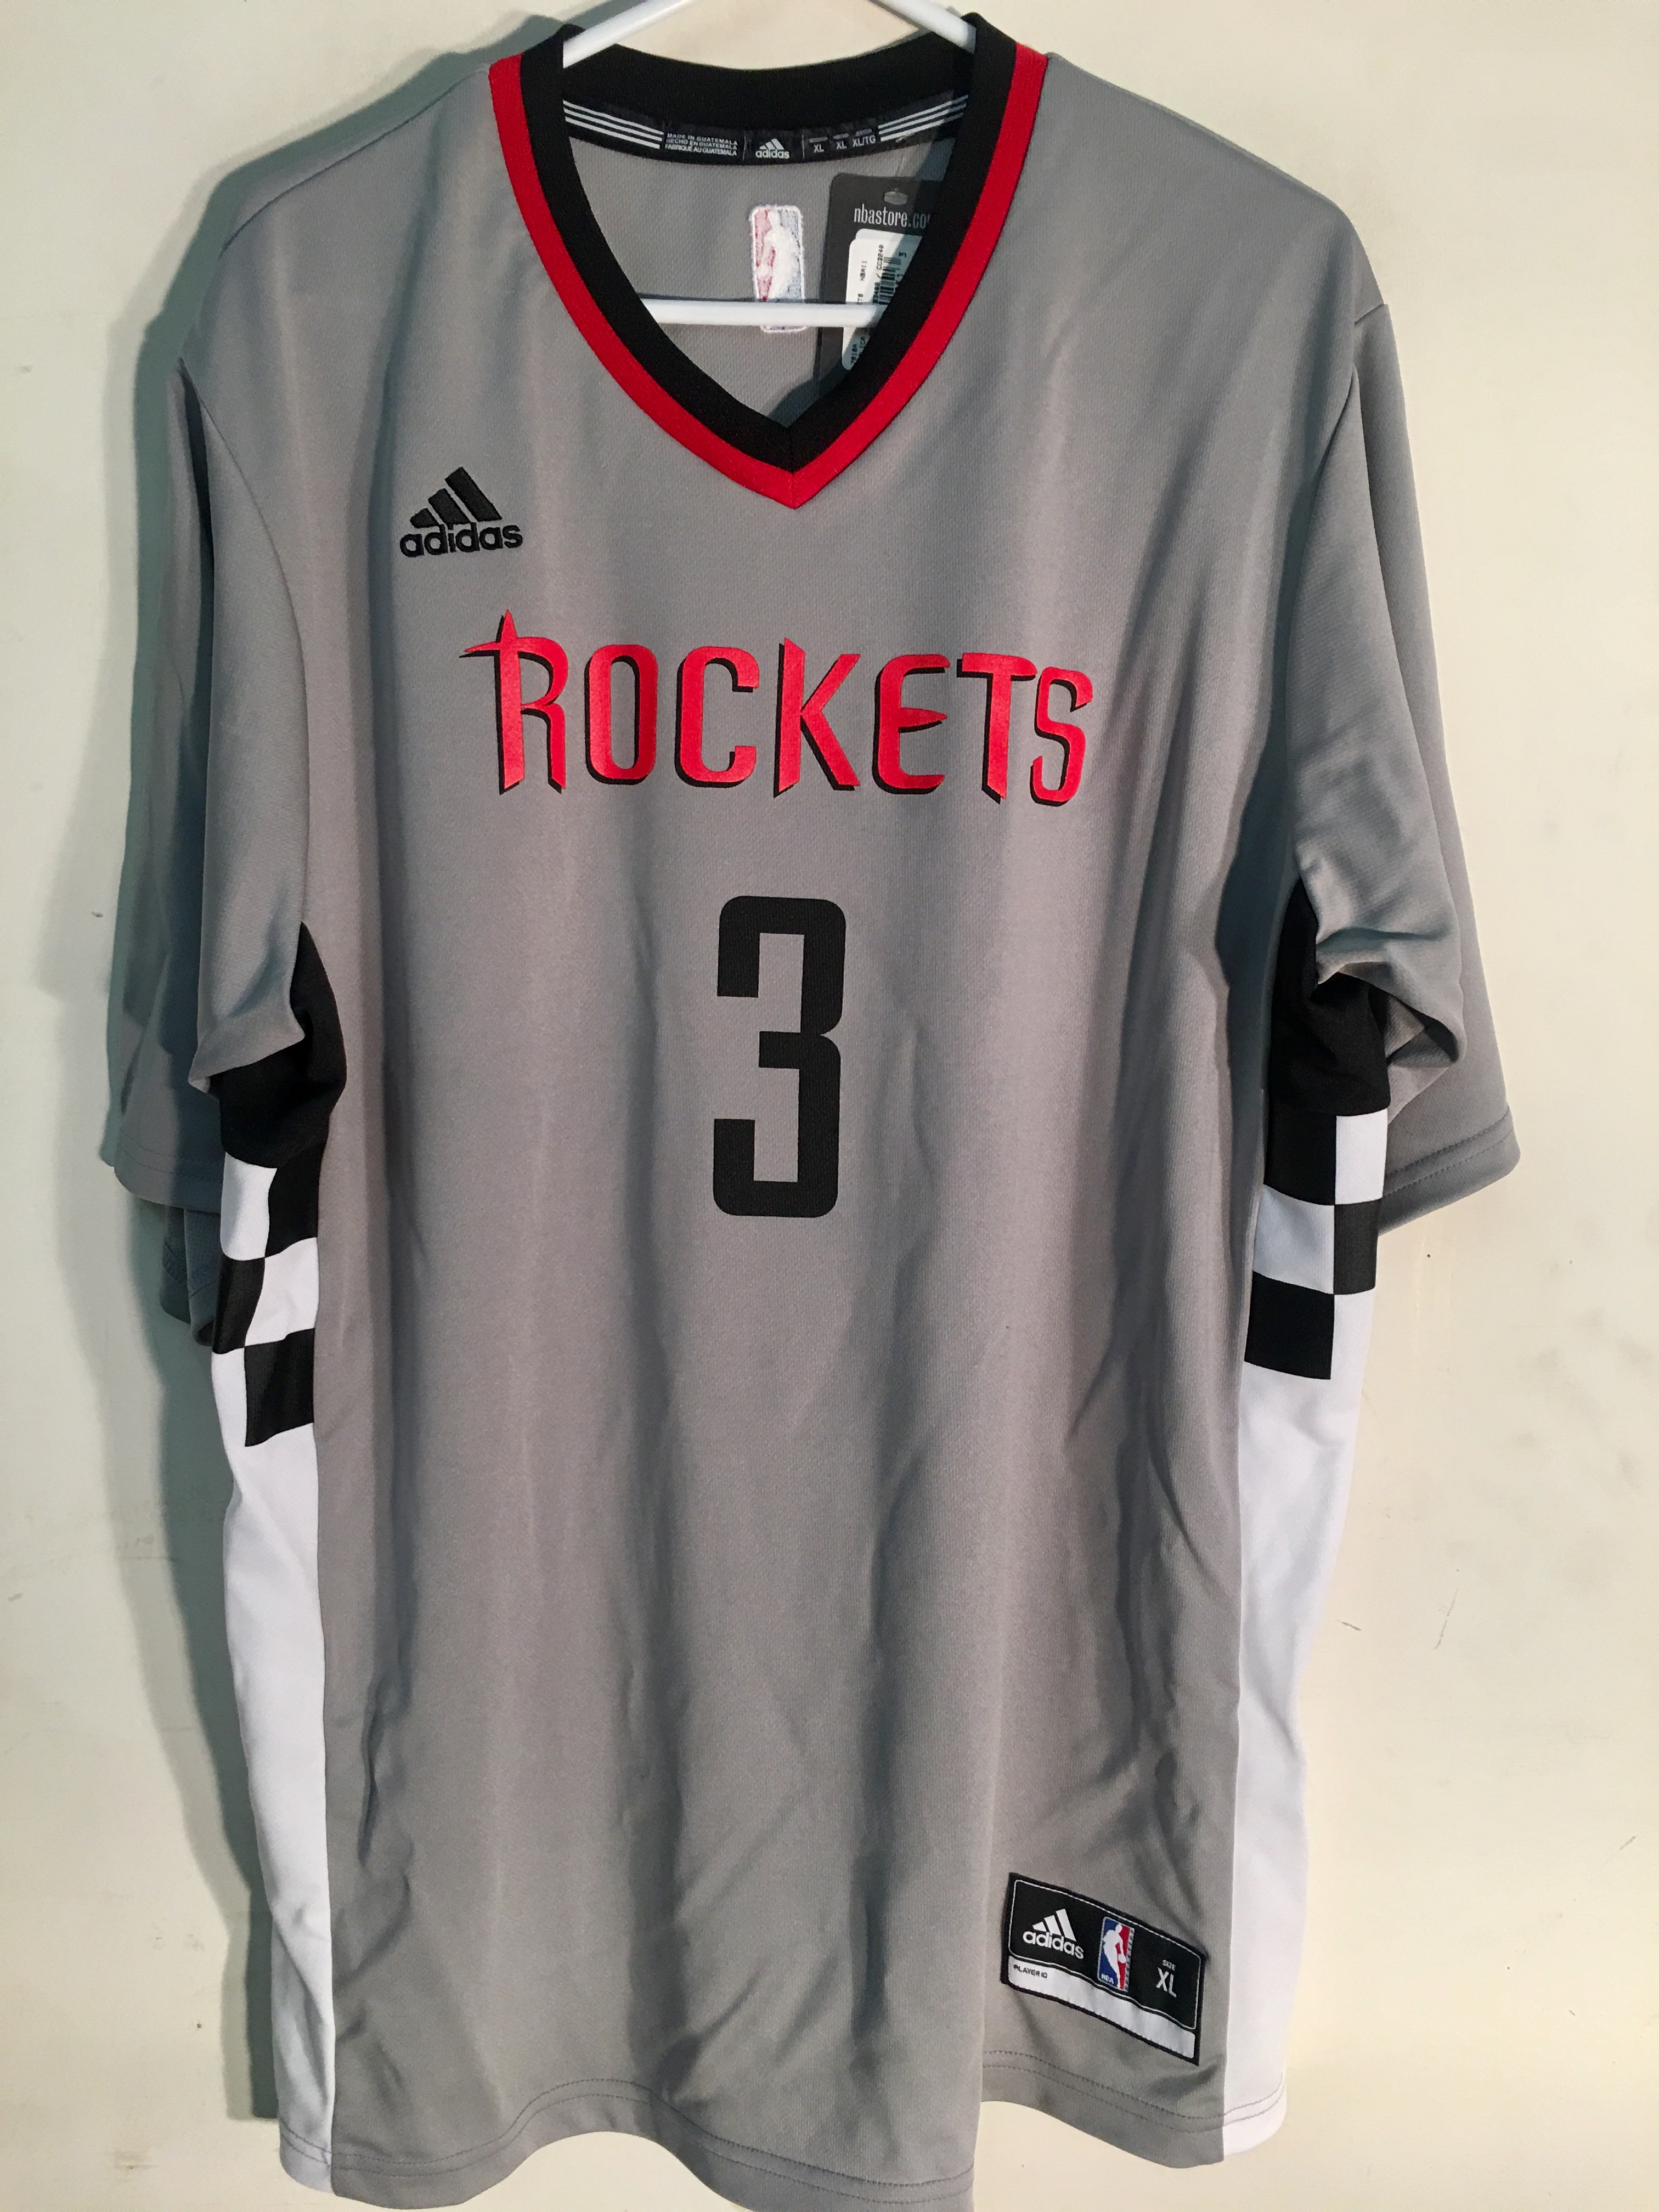 grey rockets jersey